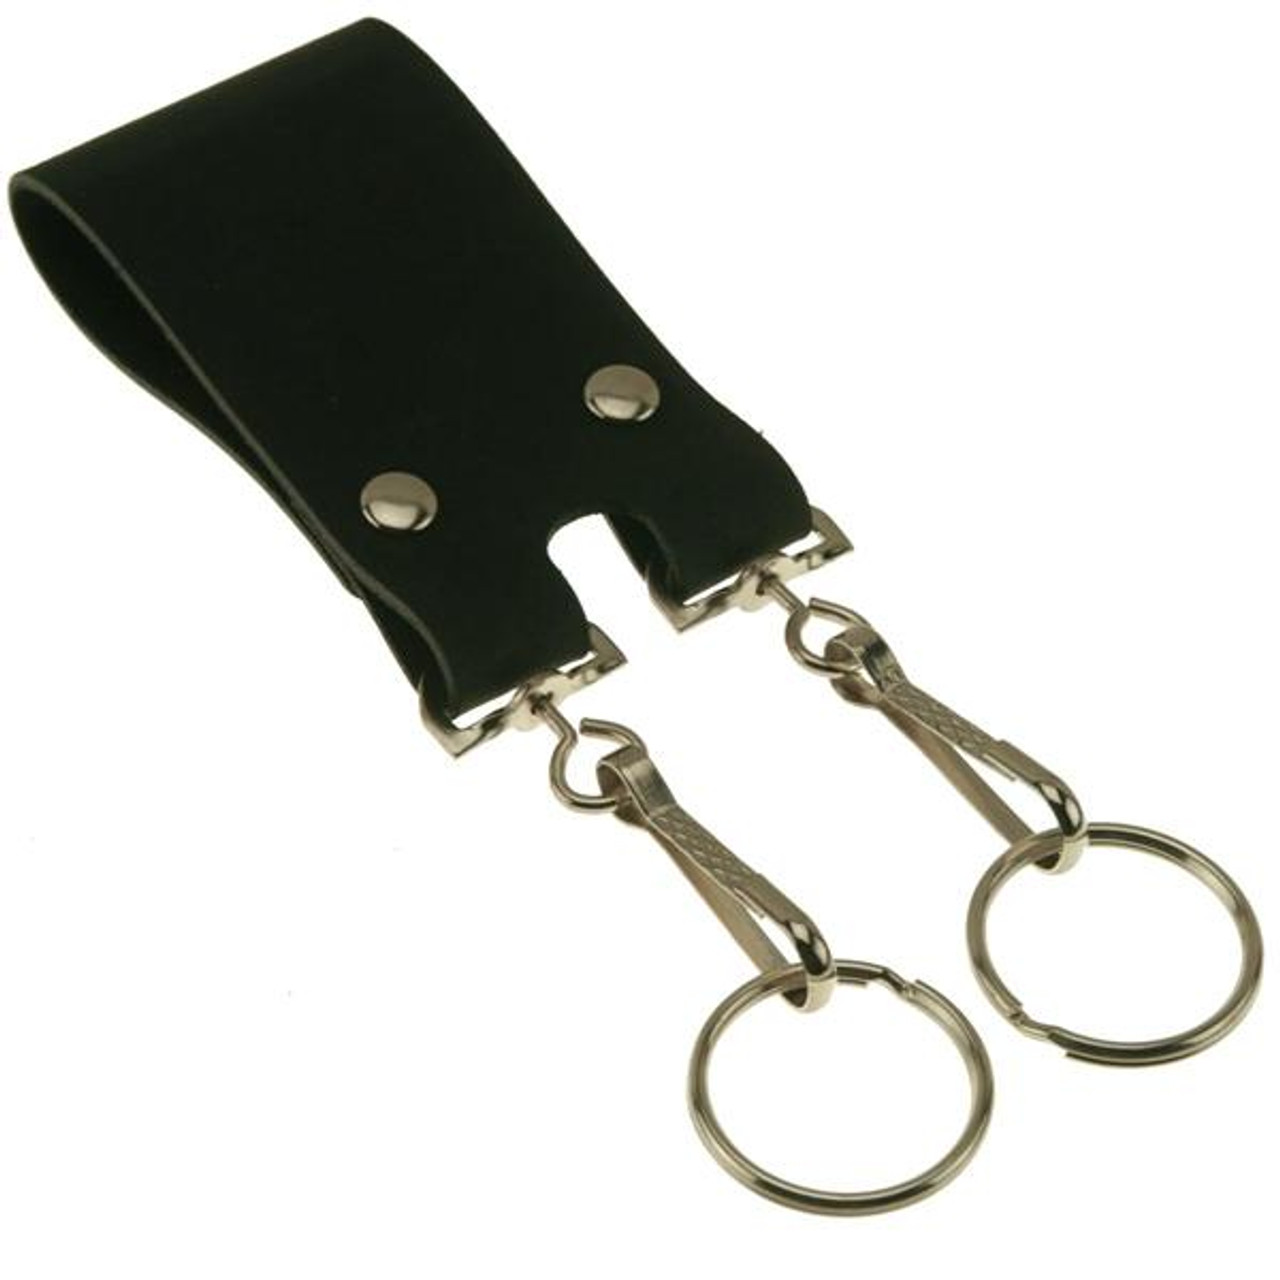 Double Rivet Leather Key Fob Keychain